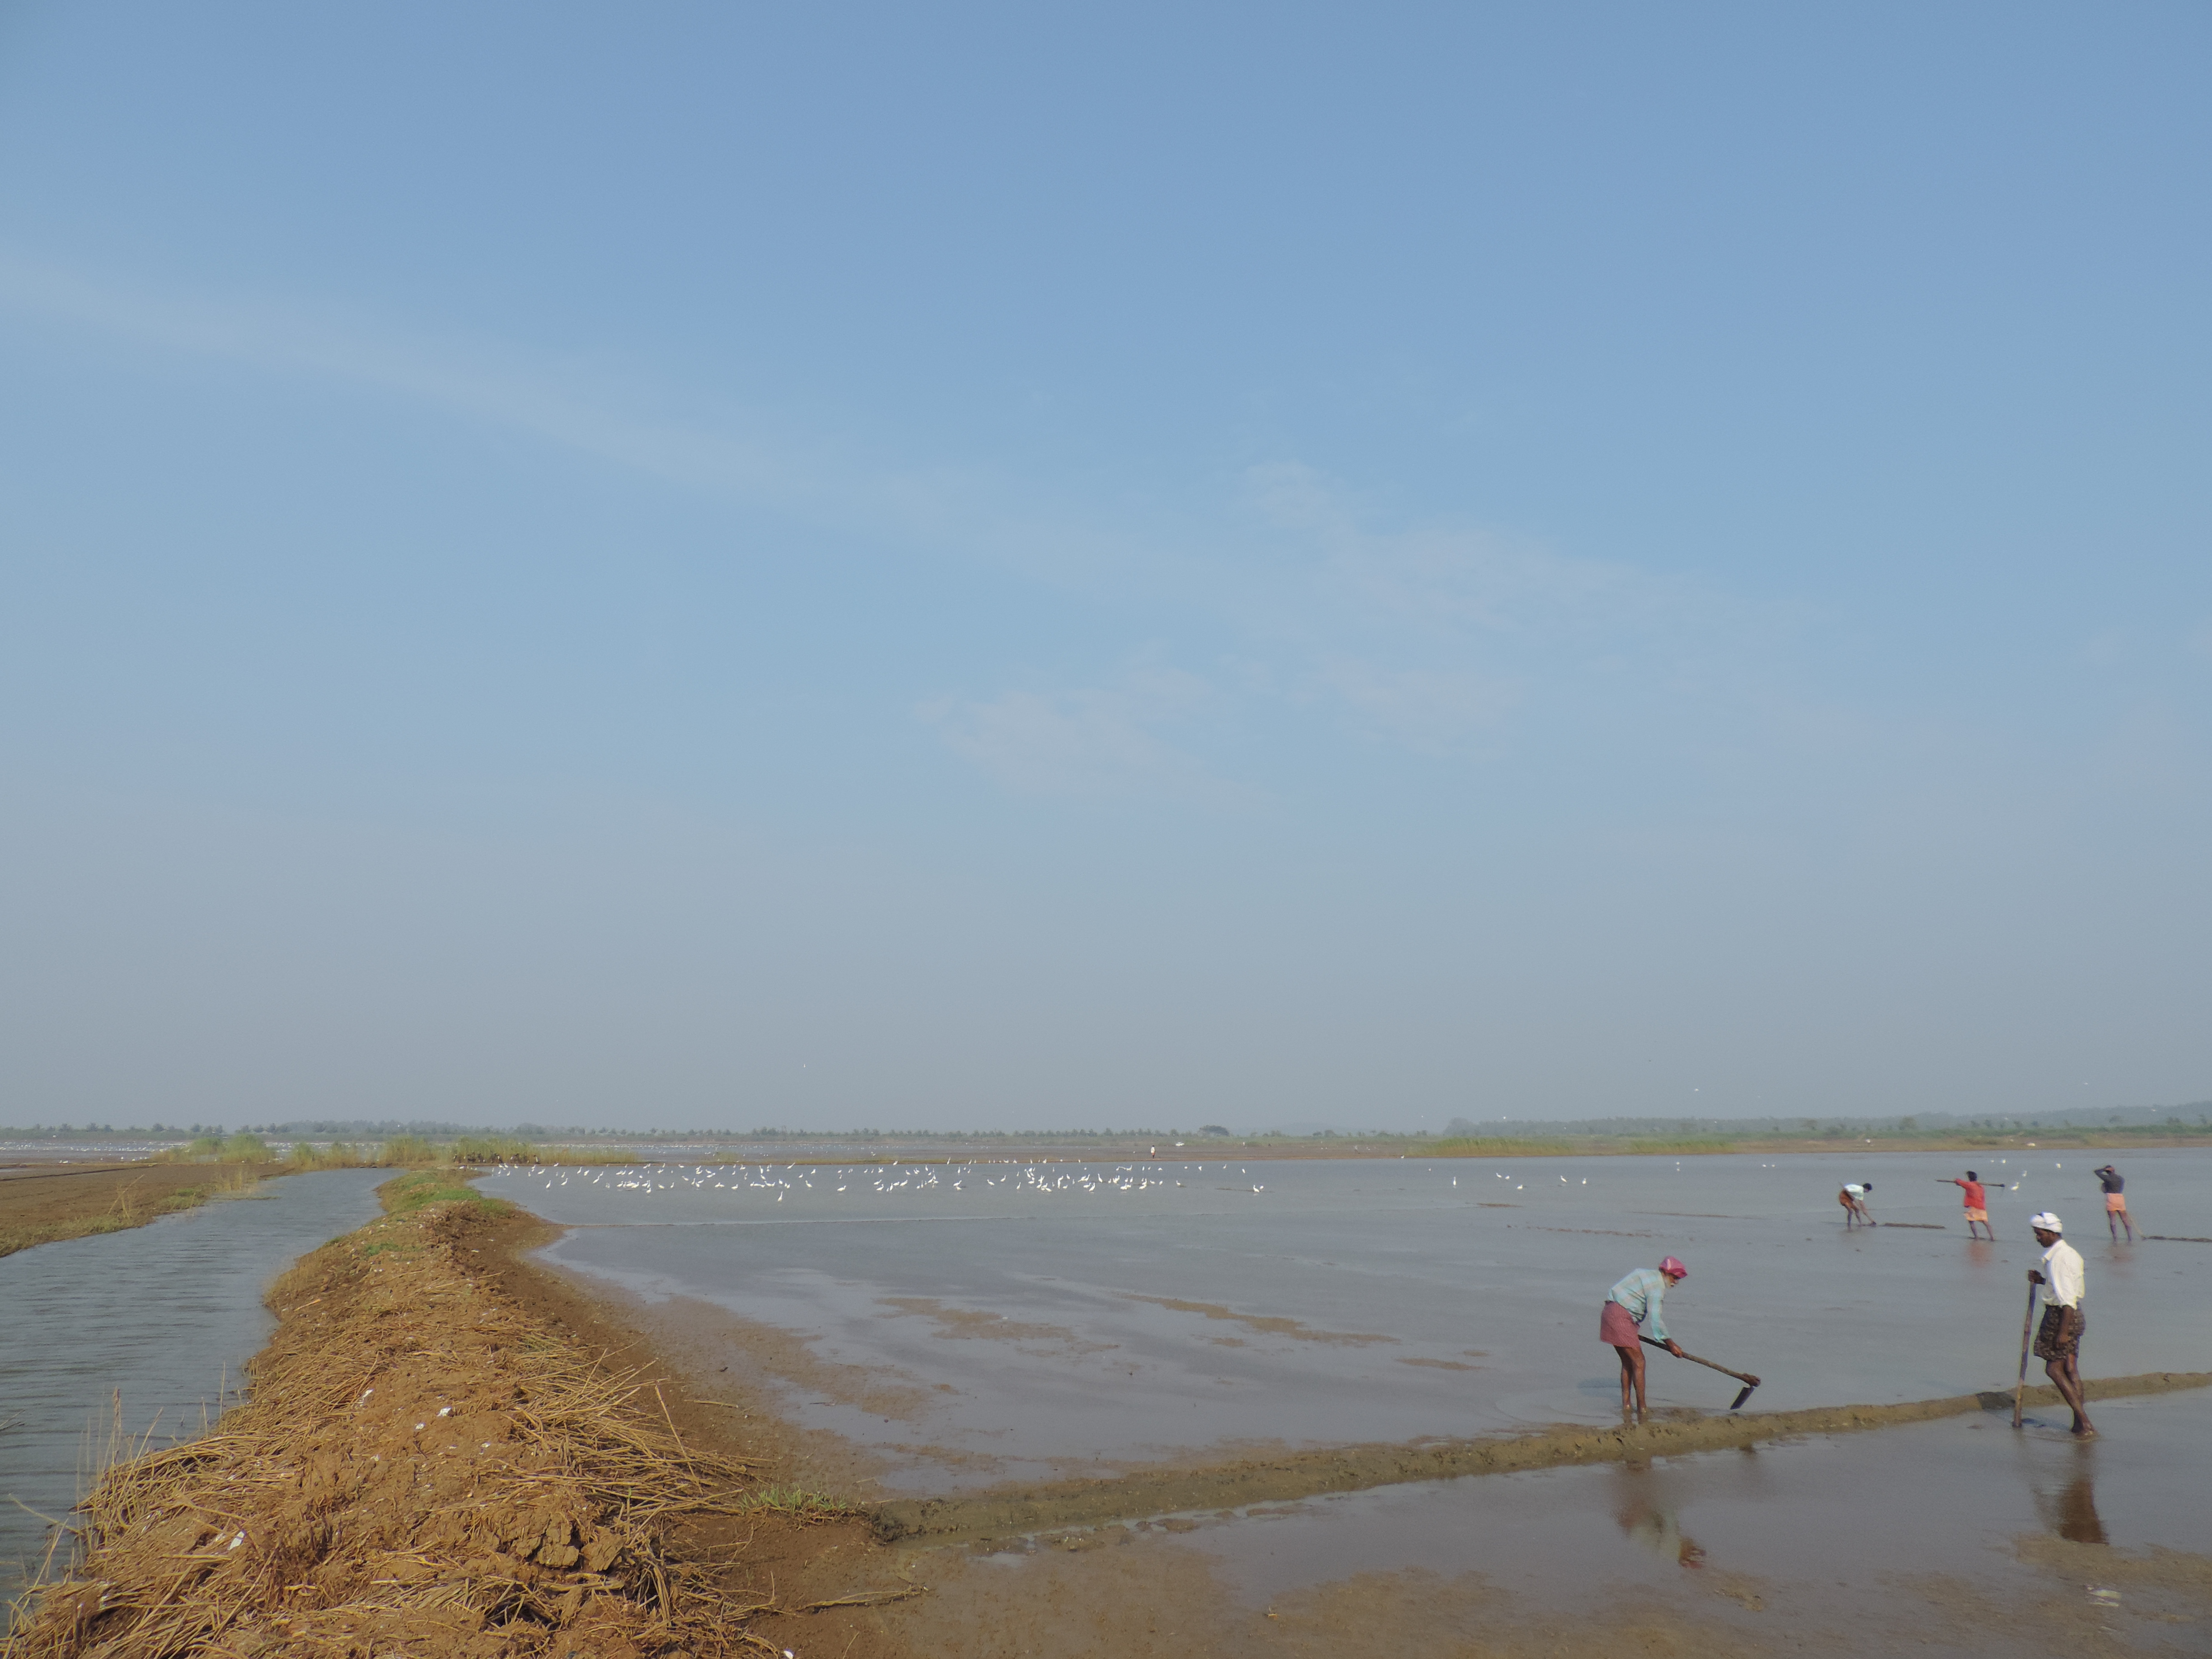 Adat Kol wetland on the morning of 10 Nov 2013.